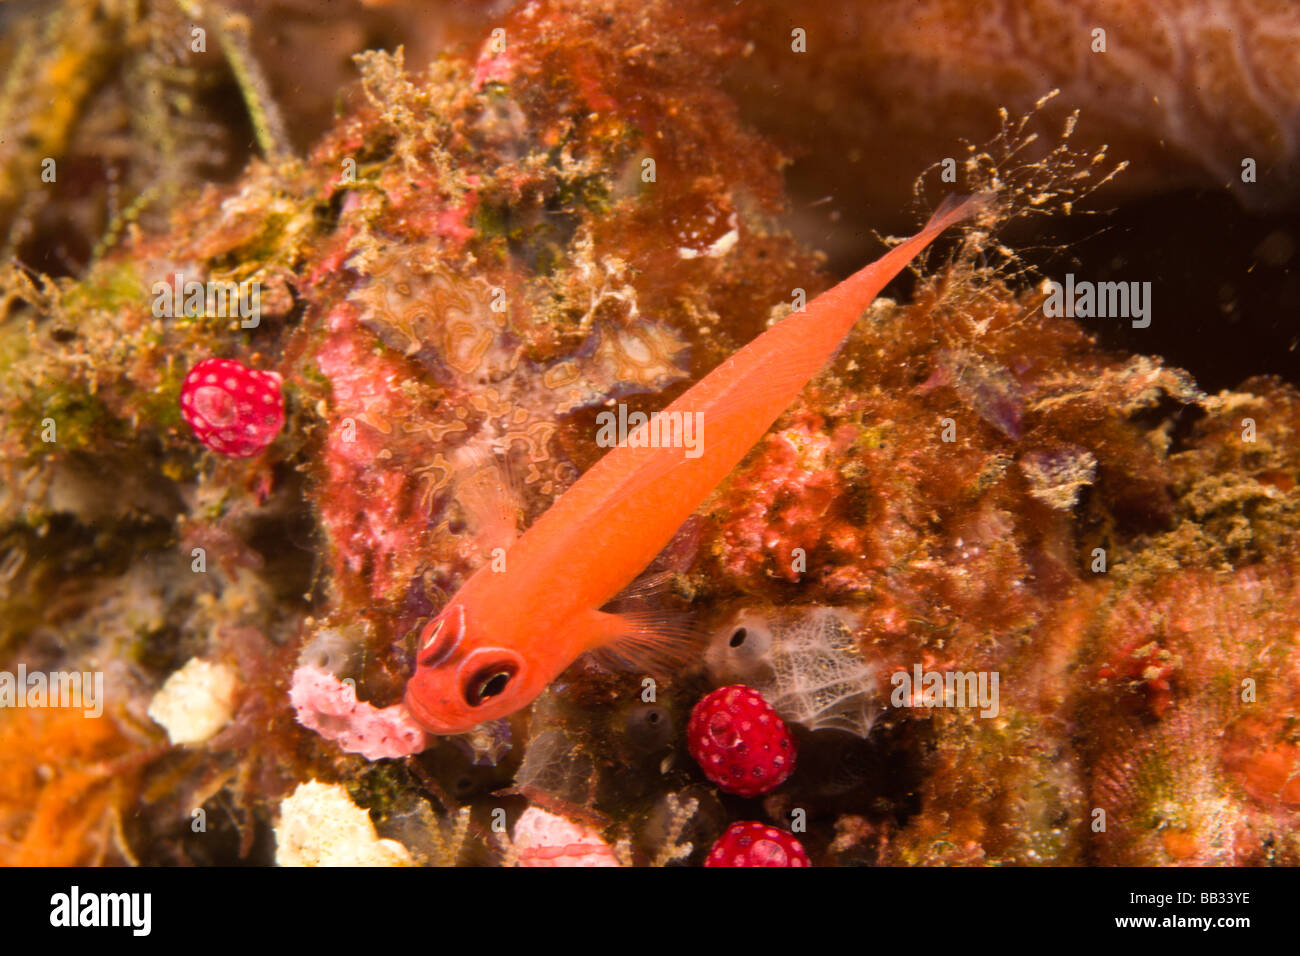 INDONESIA, Bali Province, Tulamben. Orange Reef-goby (Priolepis nuchifasciata), Tulamben Reef. Stock Photo